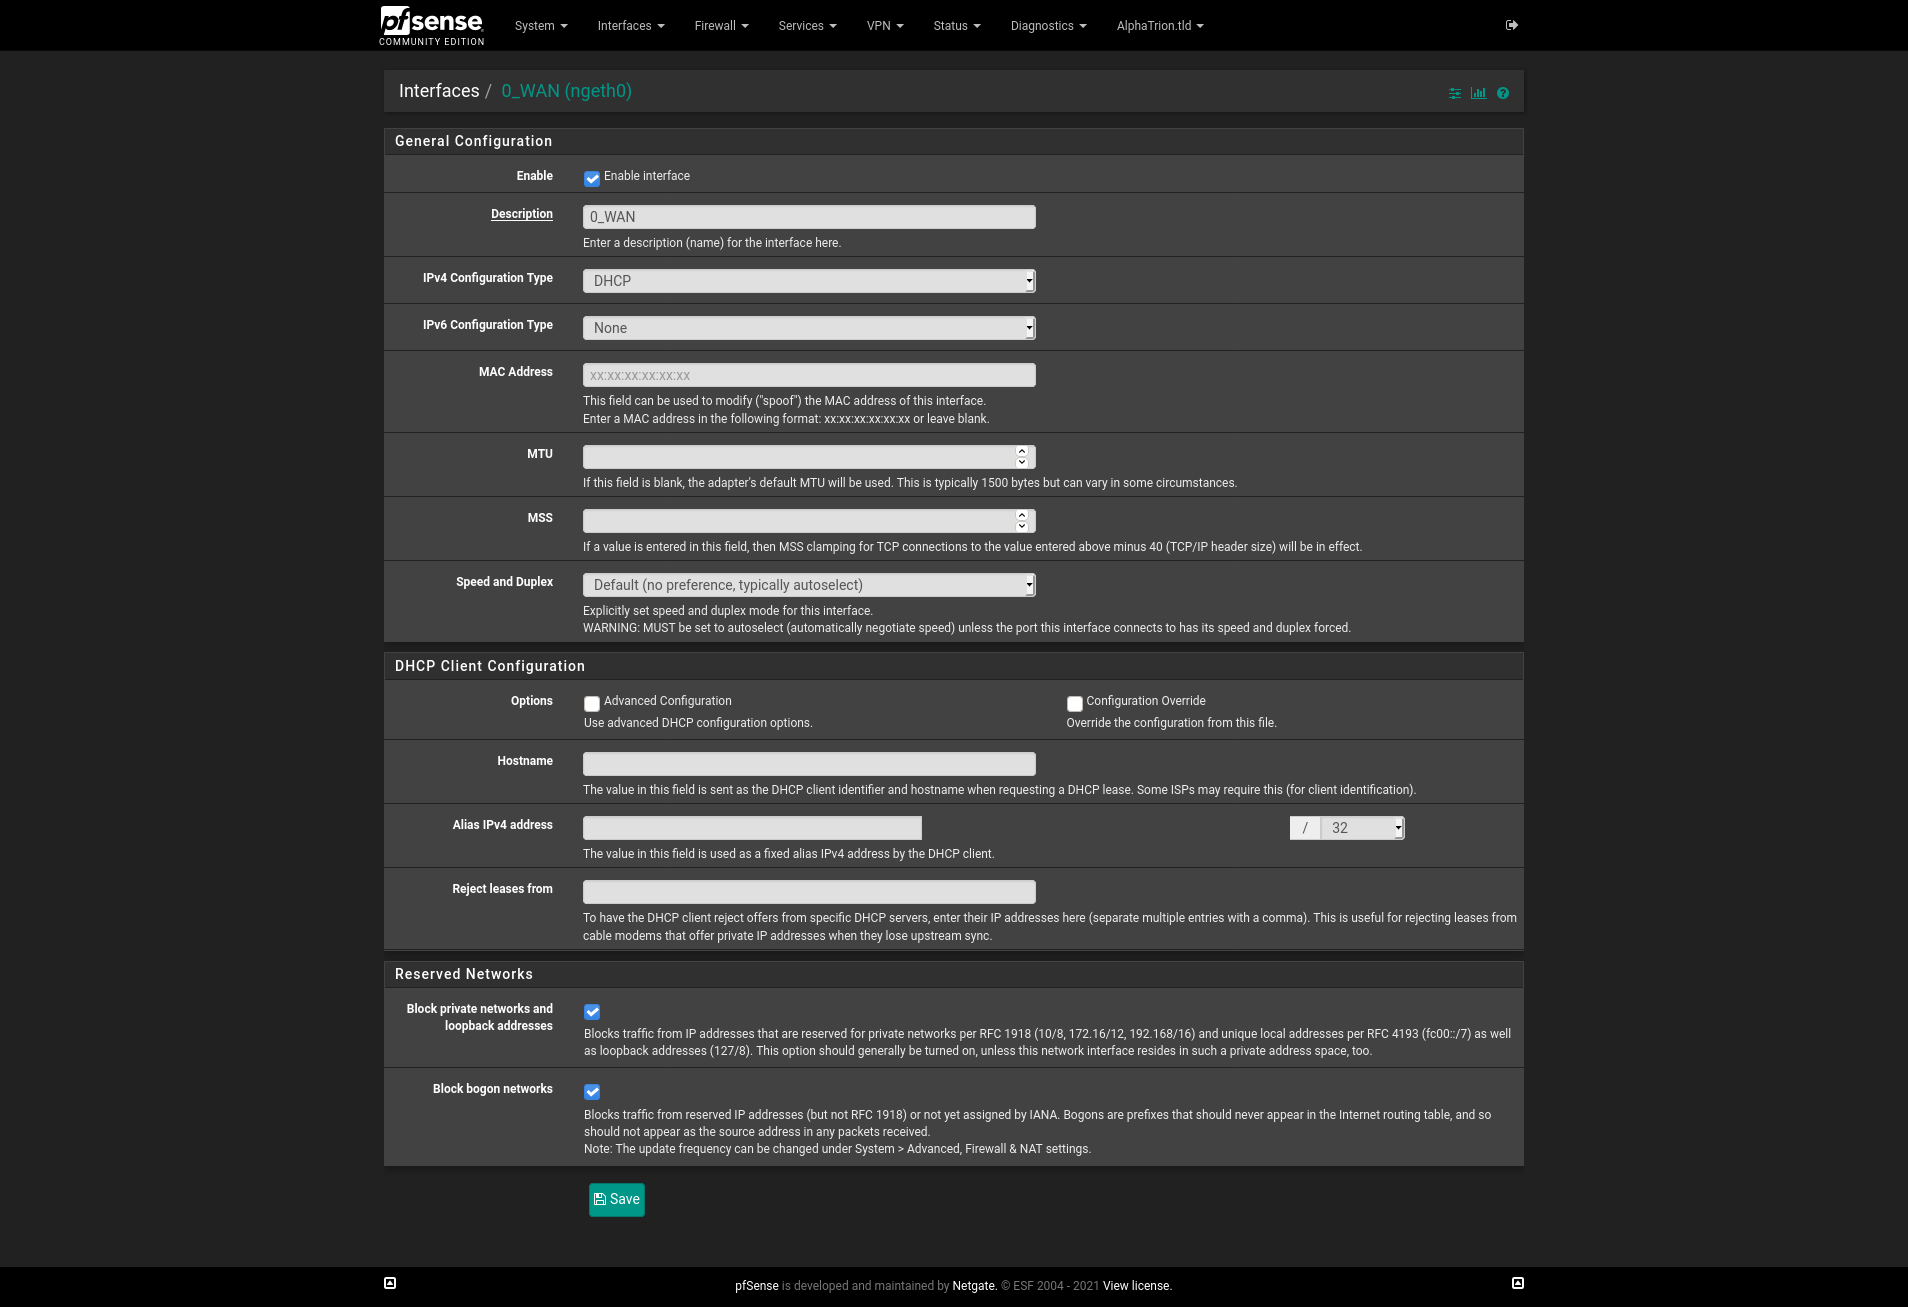 Screenshot_2021-05-08 Interfaces 0_WAN (ngeth0) - AlphaTrion tld.png